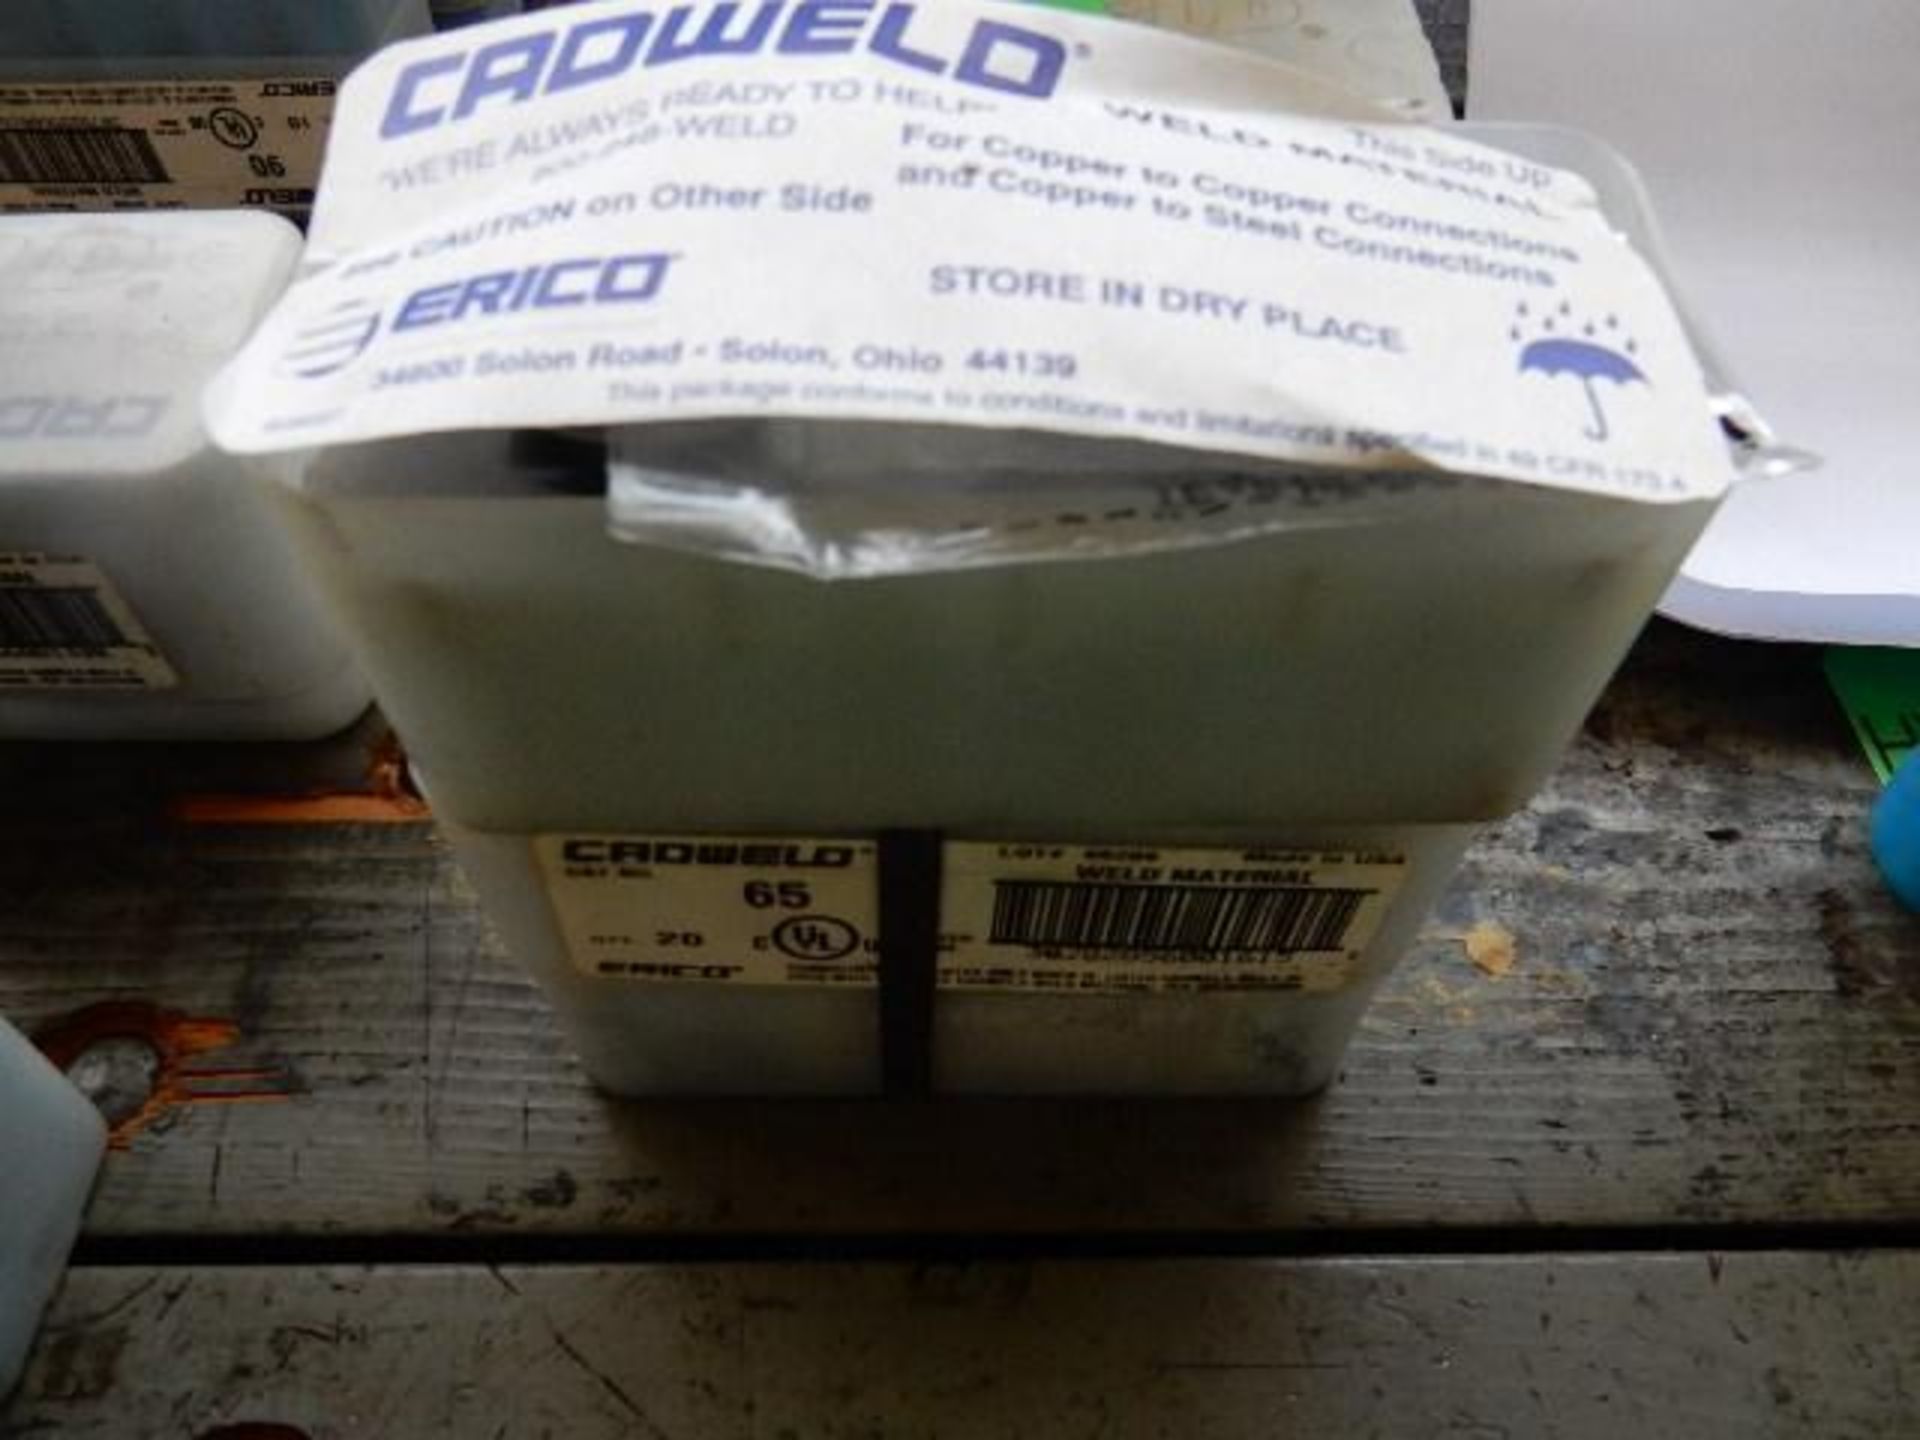 Erico Cad weld 65 welding material - Image 3 of 4